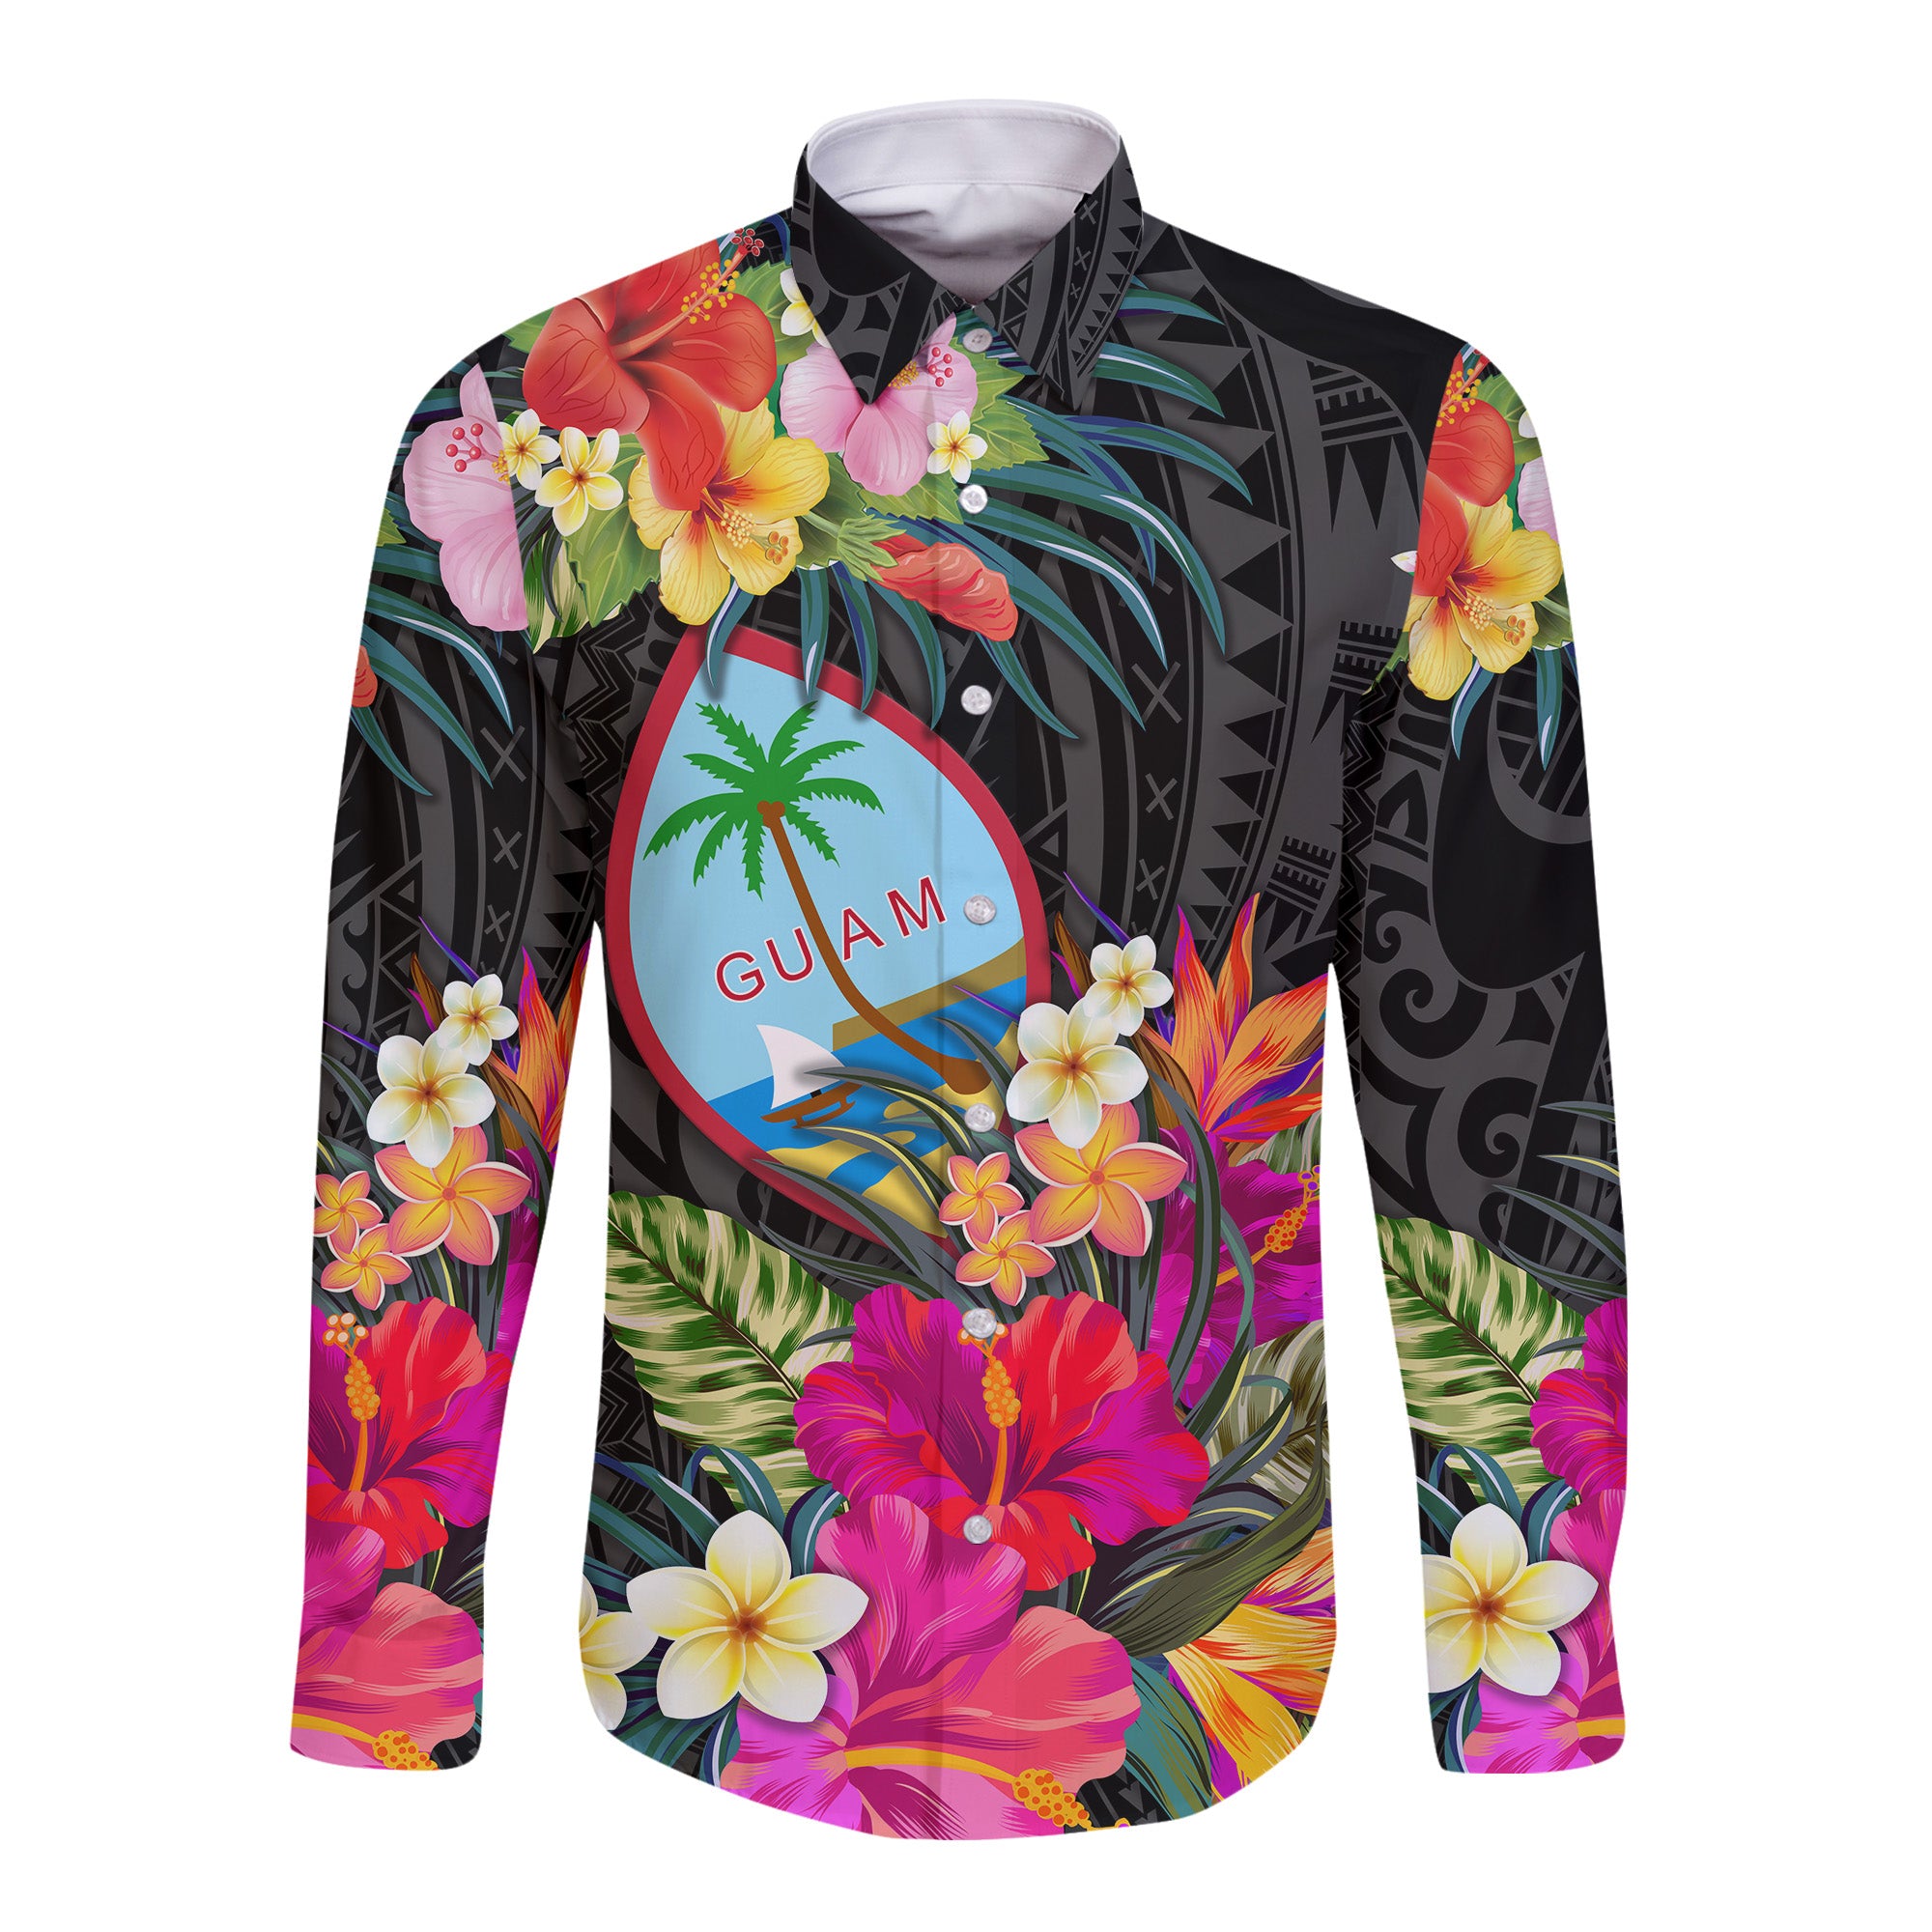 (Custom Personalised) Guam Polynesian Hawaii Long Sleeve Button Shirt Tropical Flowers - Colorful Vibes LT8 - Polynesian Pride